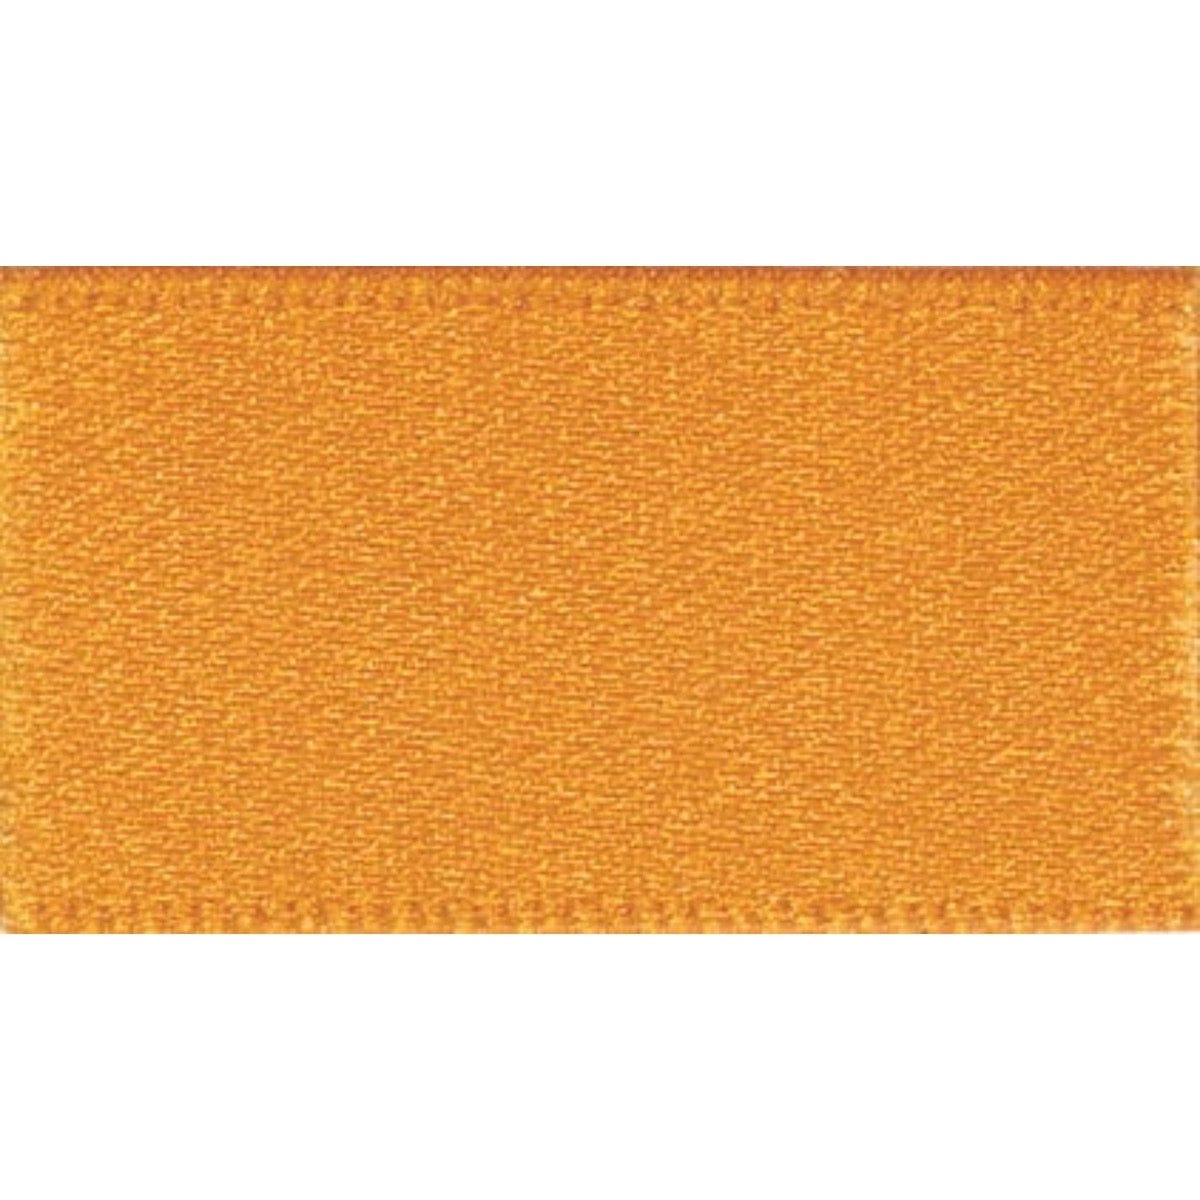 Double Faced Satin Marigold Orange: 7mm wide. Price per metre.